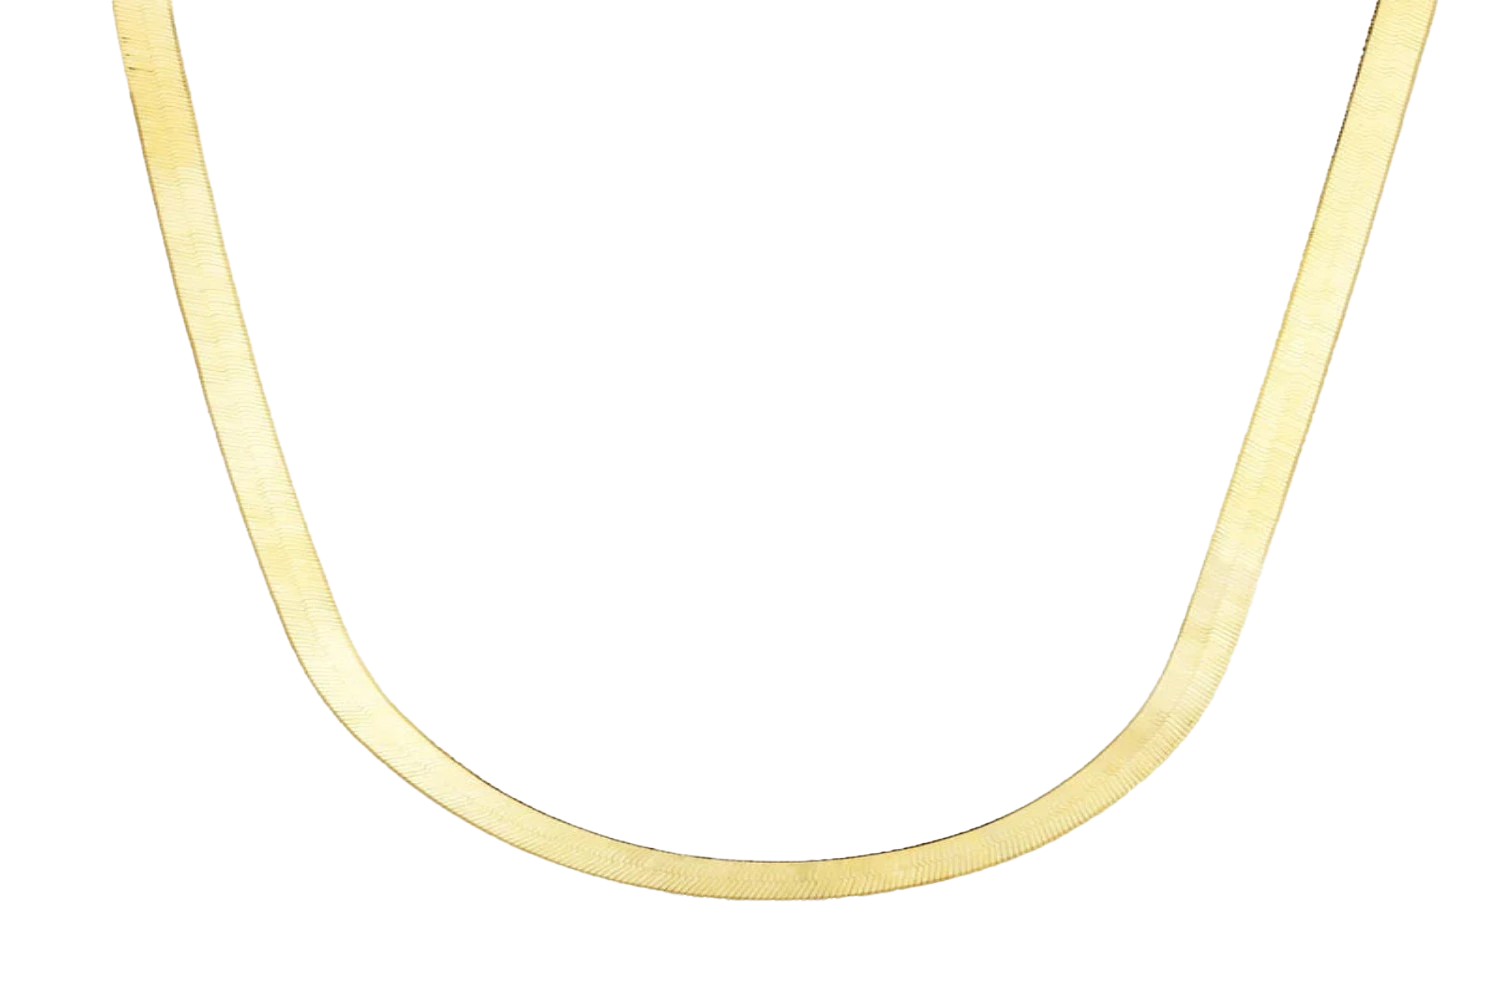 Herringbone Chain Necklace